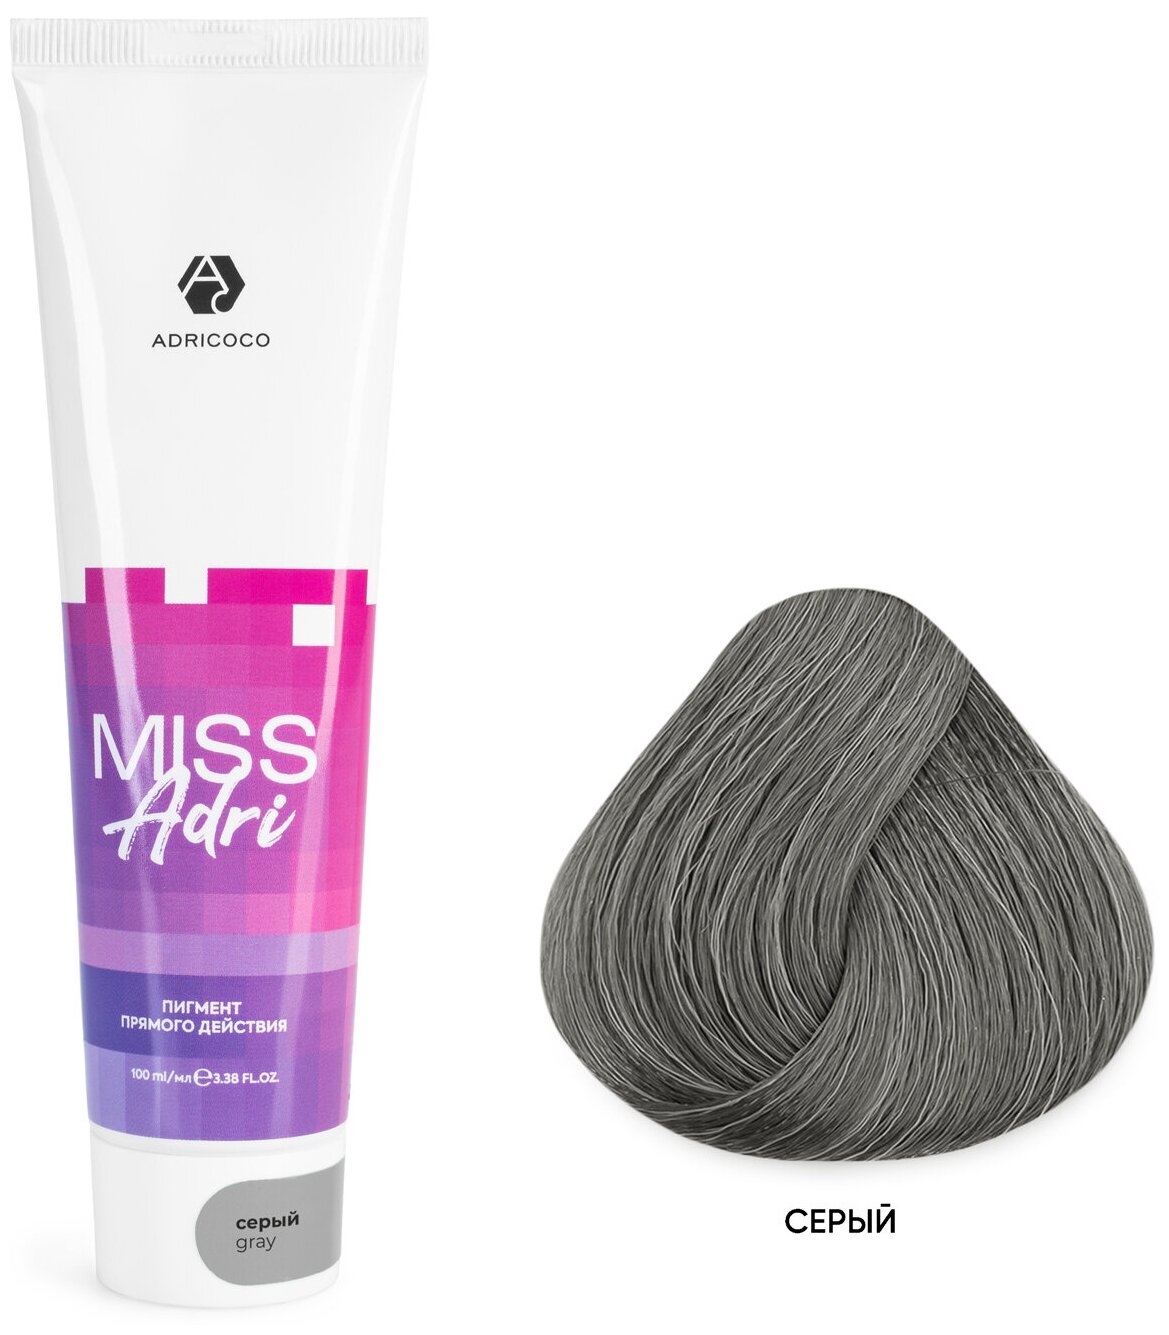 Adricoco, Miss Adri - пигмент прямого действия для волос без окислителя (серый), 100 мл